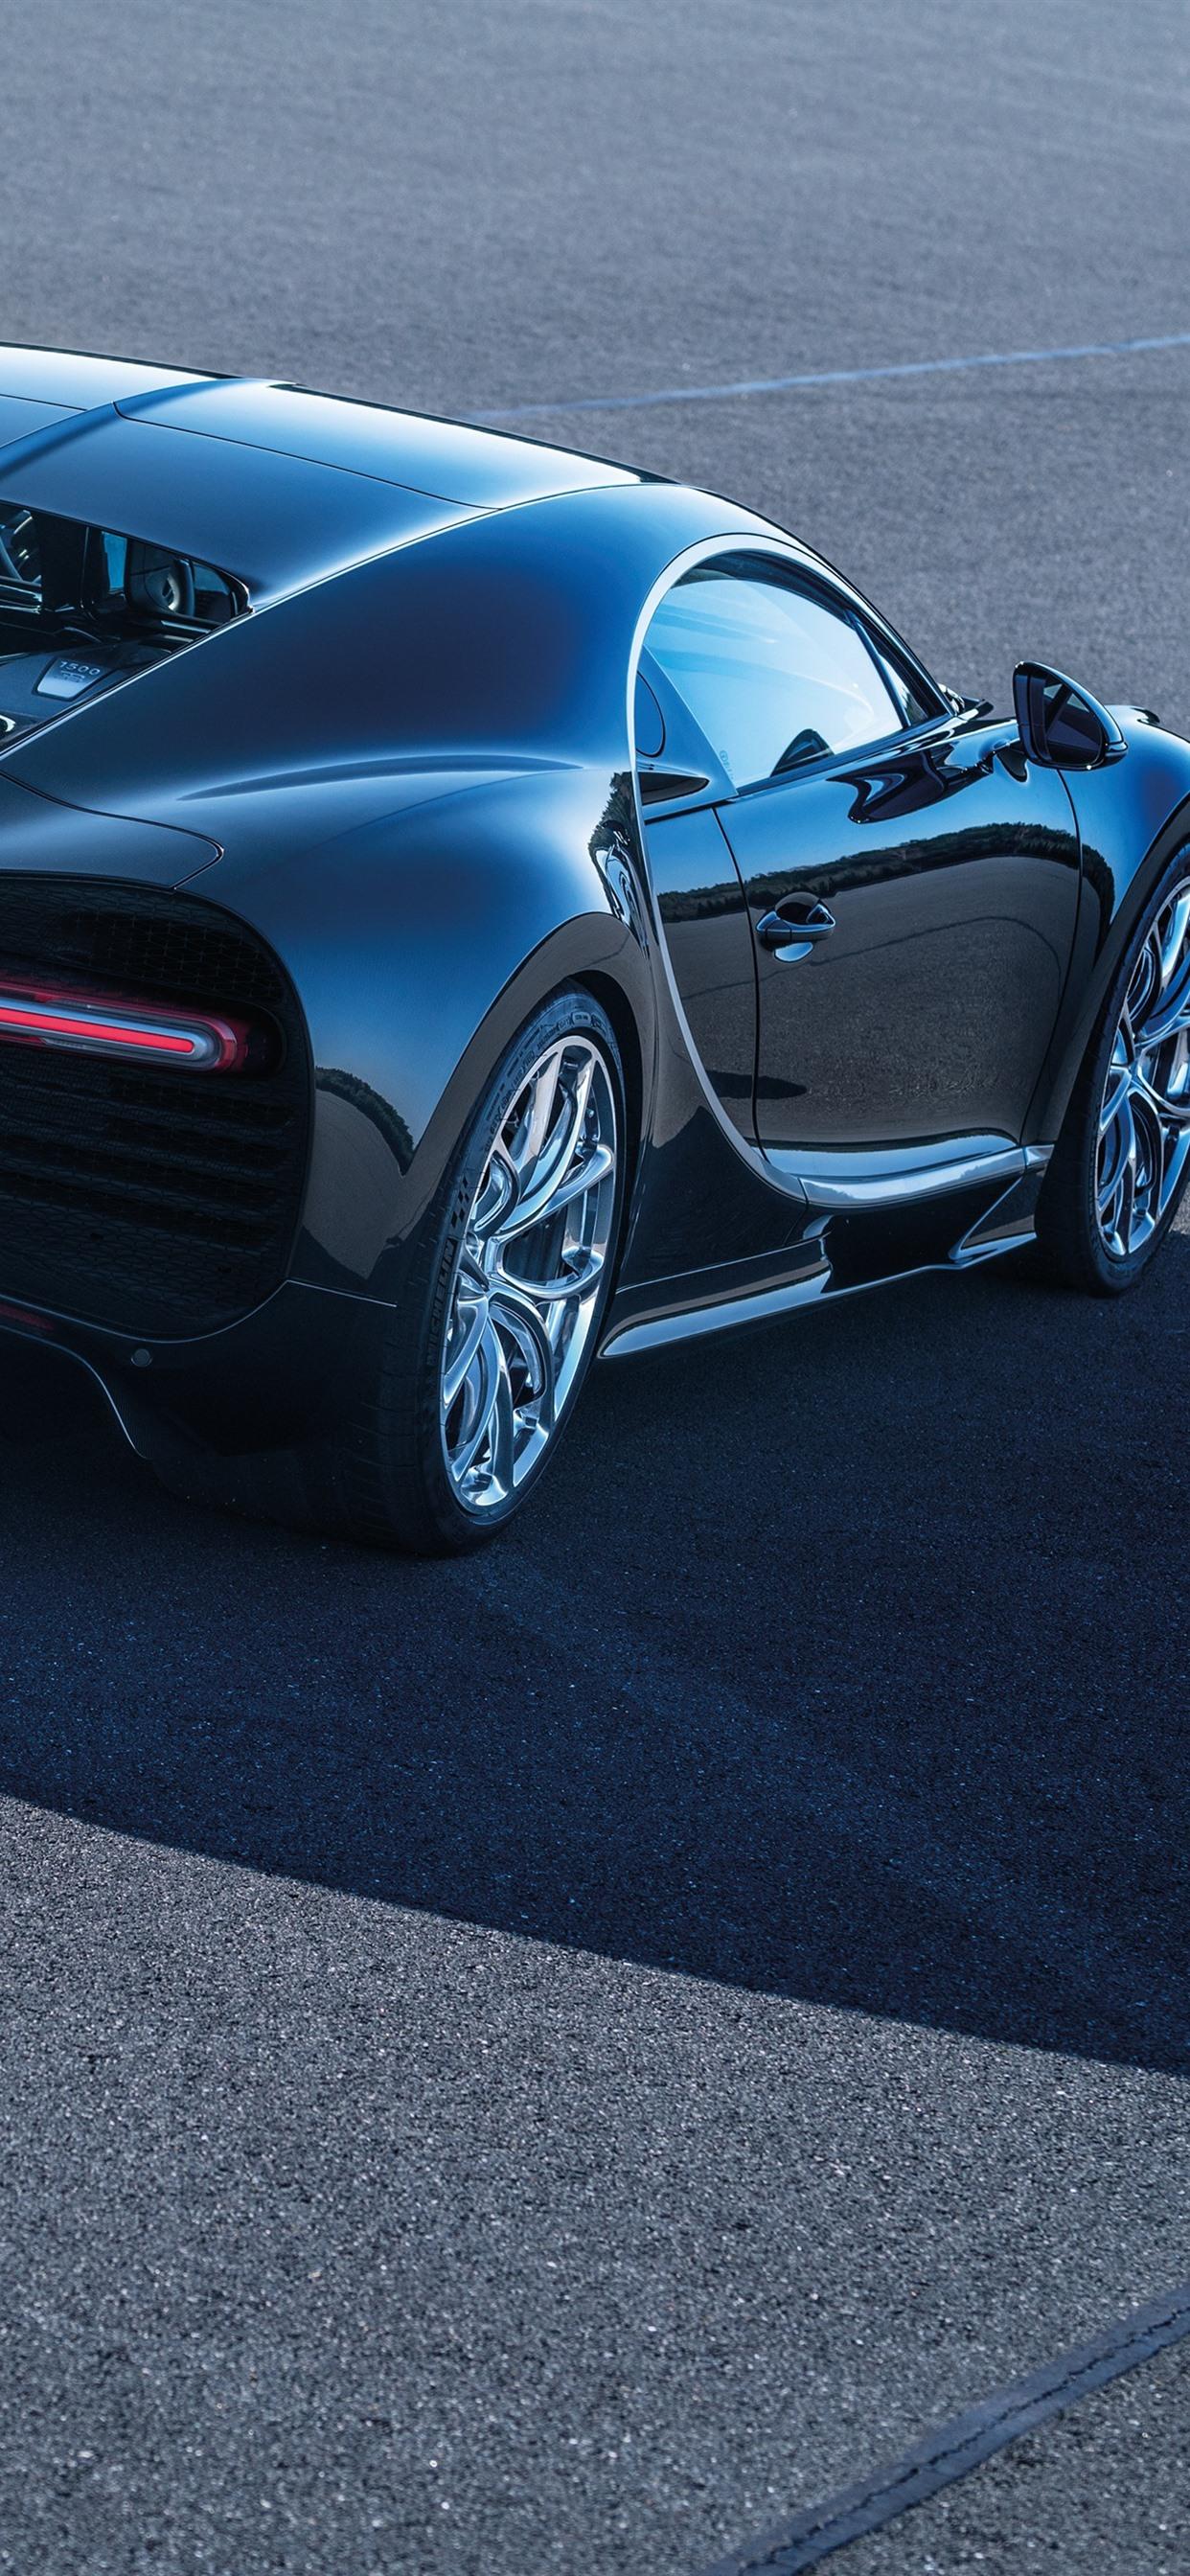 Bugatti Chiron black supercar rear view 1242x2688 iPhone XS